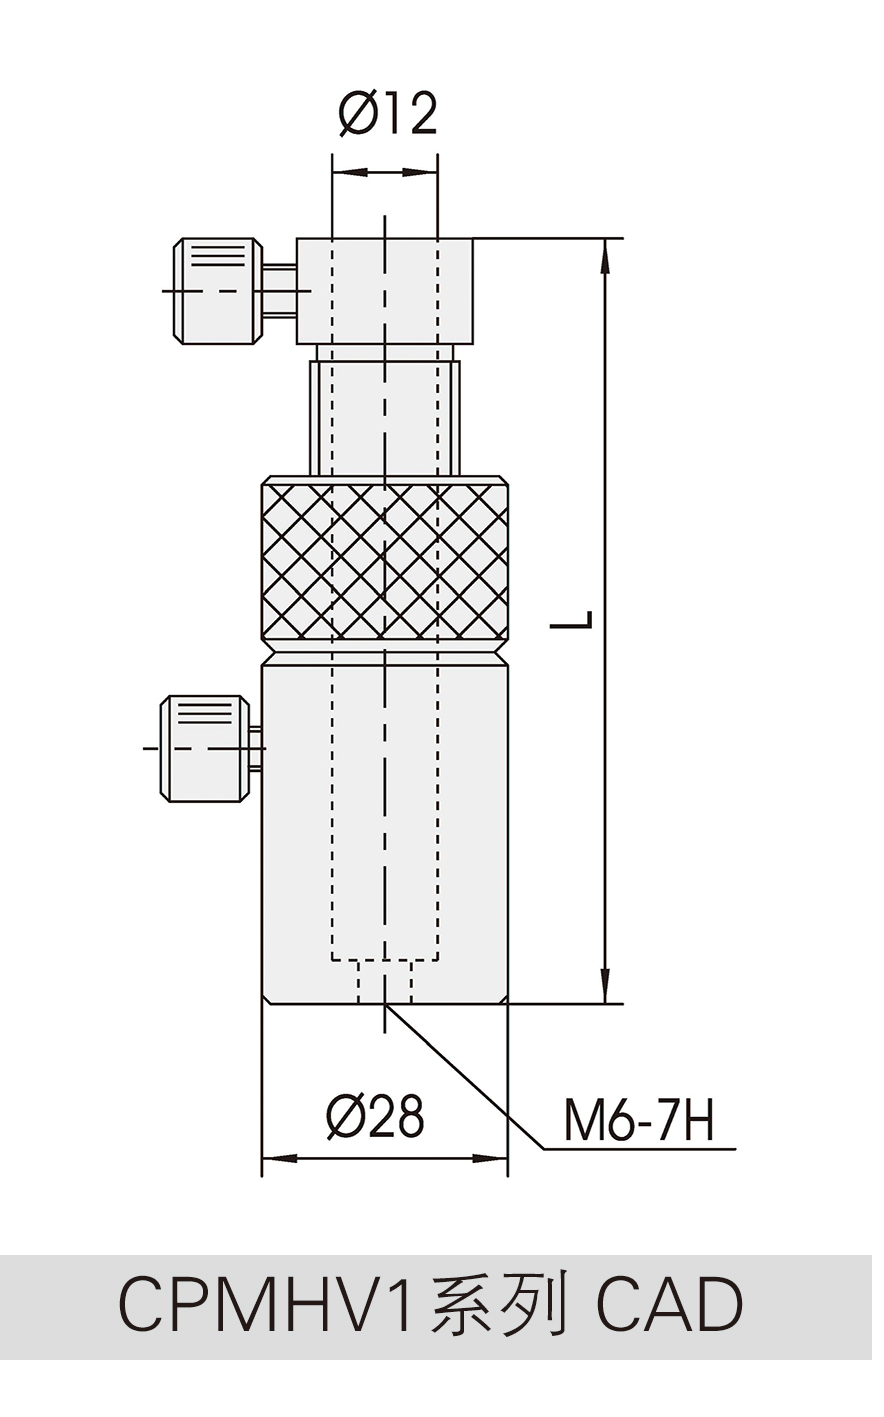 CPMHV1系列升降杆架CAD